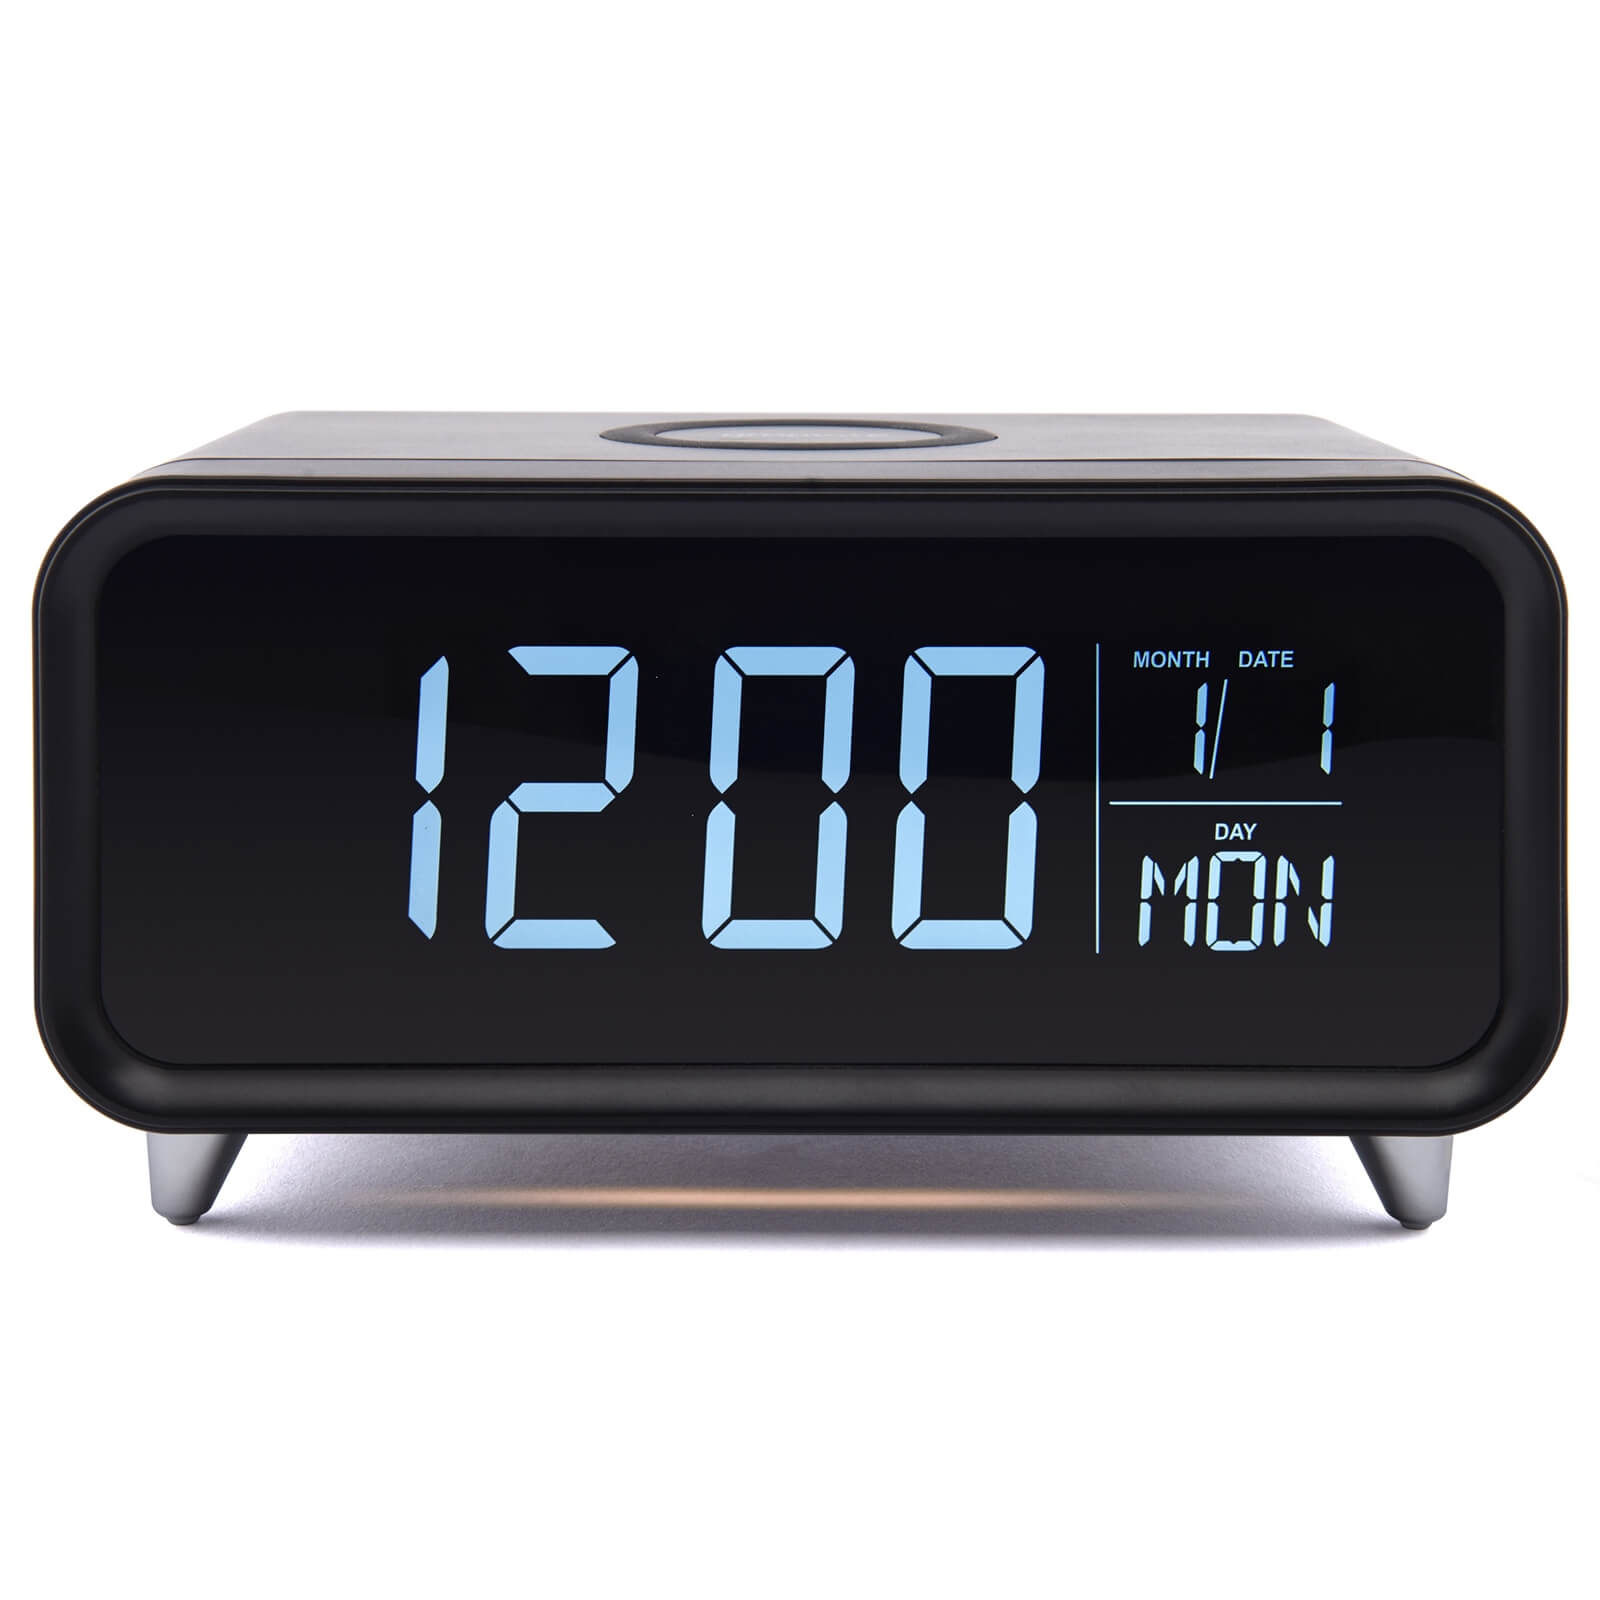 Groov-E Athena Alarm Clock with Wireless Charging Pad - Black